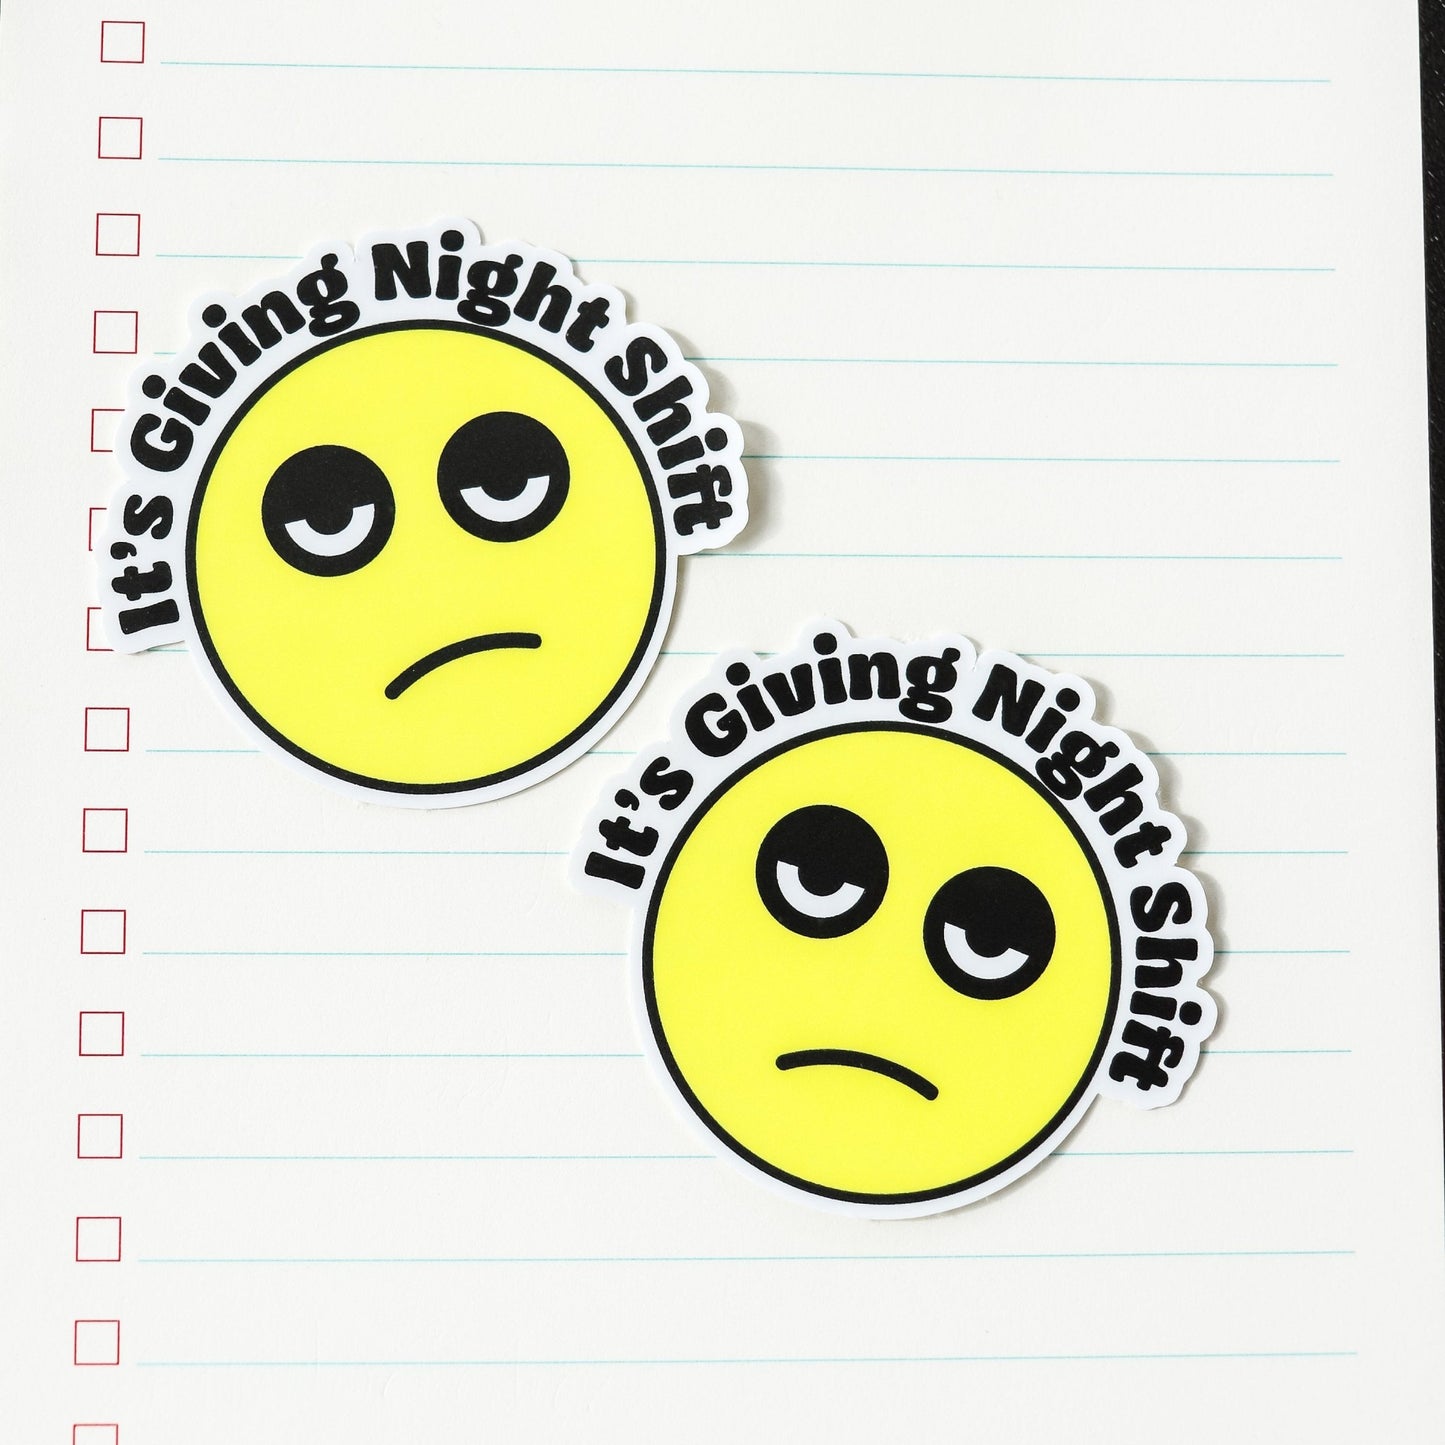 Sticker - It's Giving Night Shift - Acclaim Status Co Acclaim Status Co